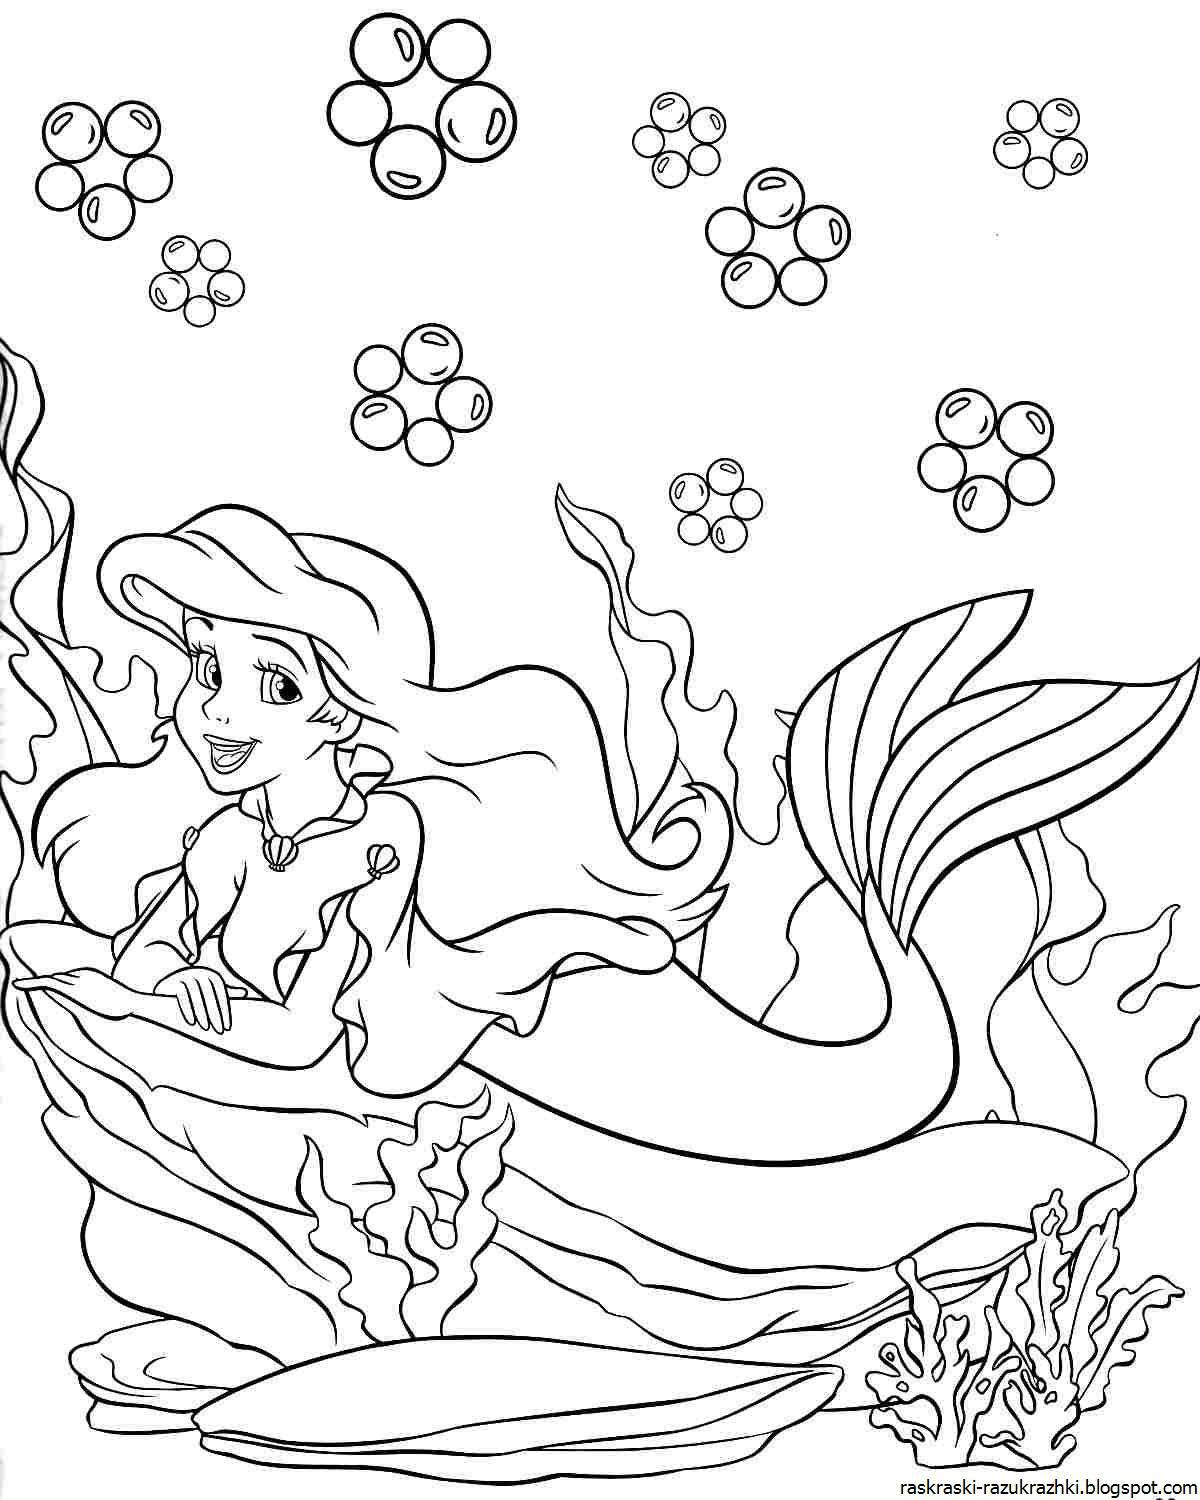 Dreamy mermaid coloring book for kids